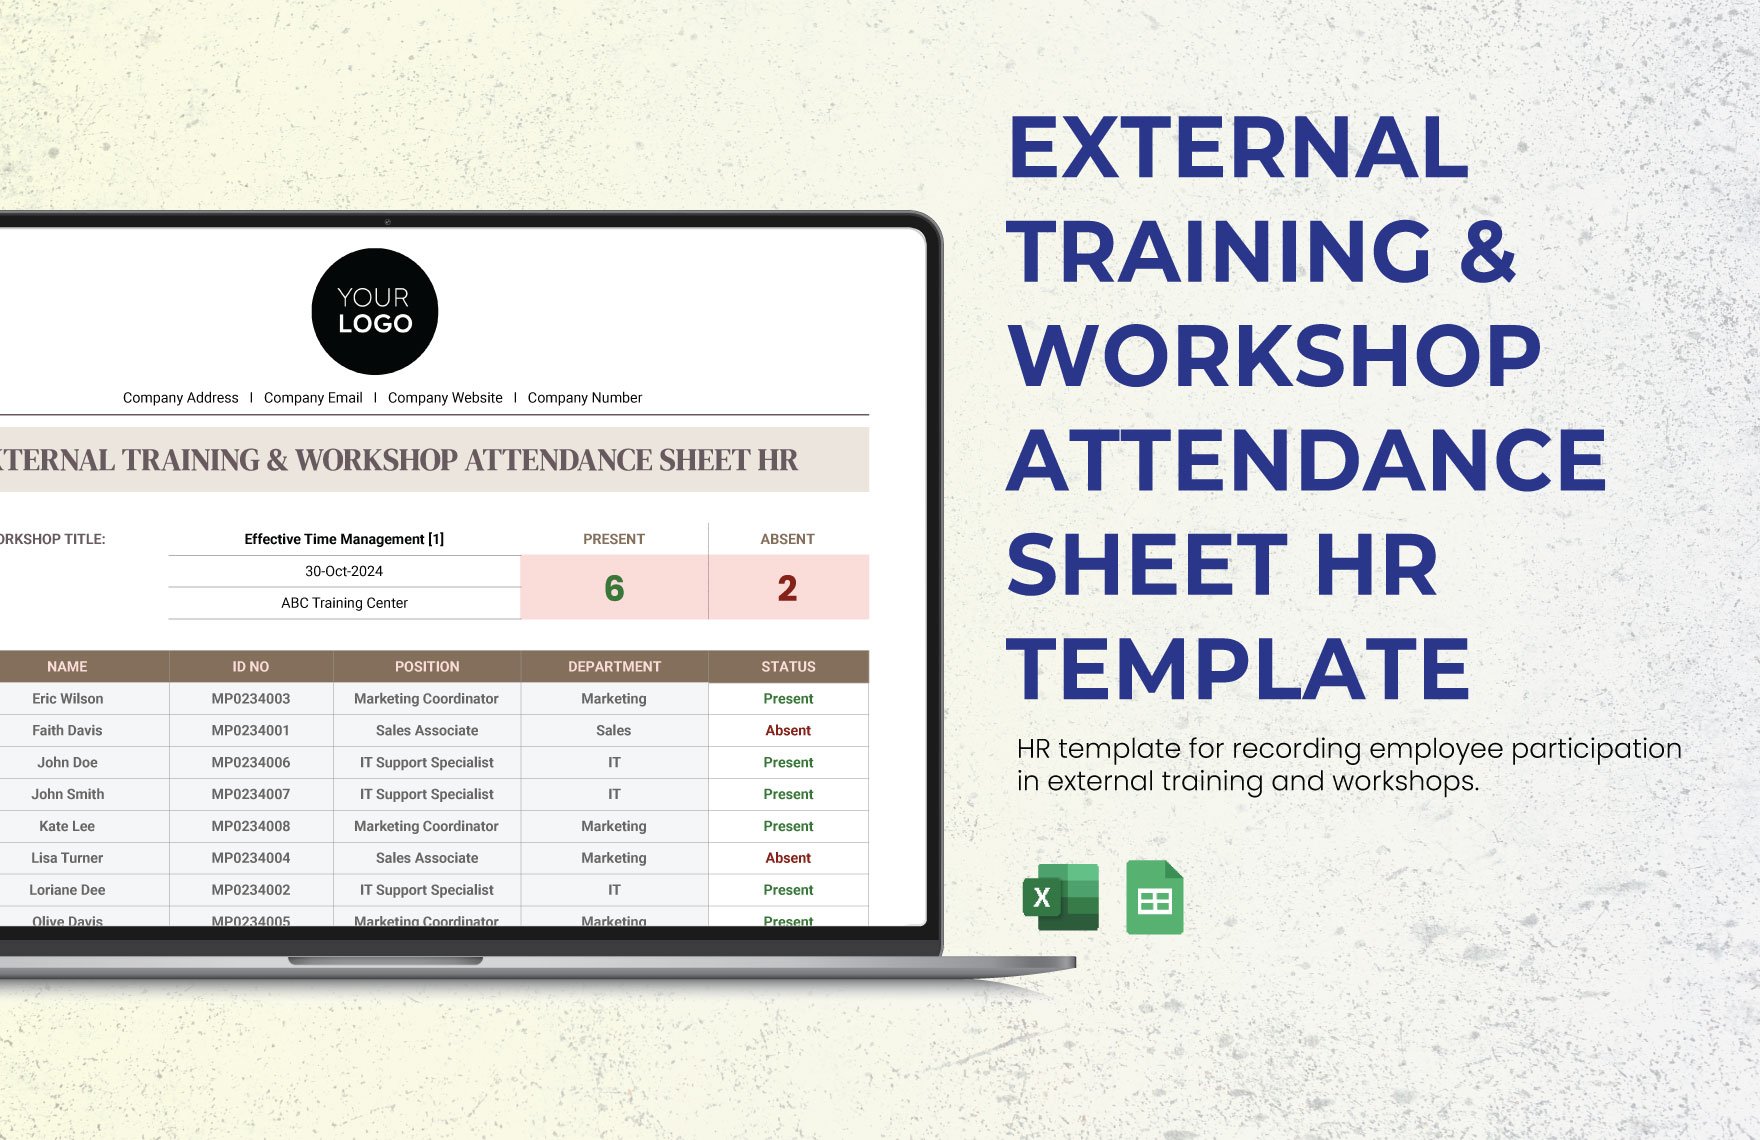 External Training & Workshop Attendance Sheet HR Template in Excel, Google Sheets